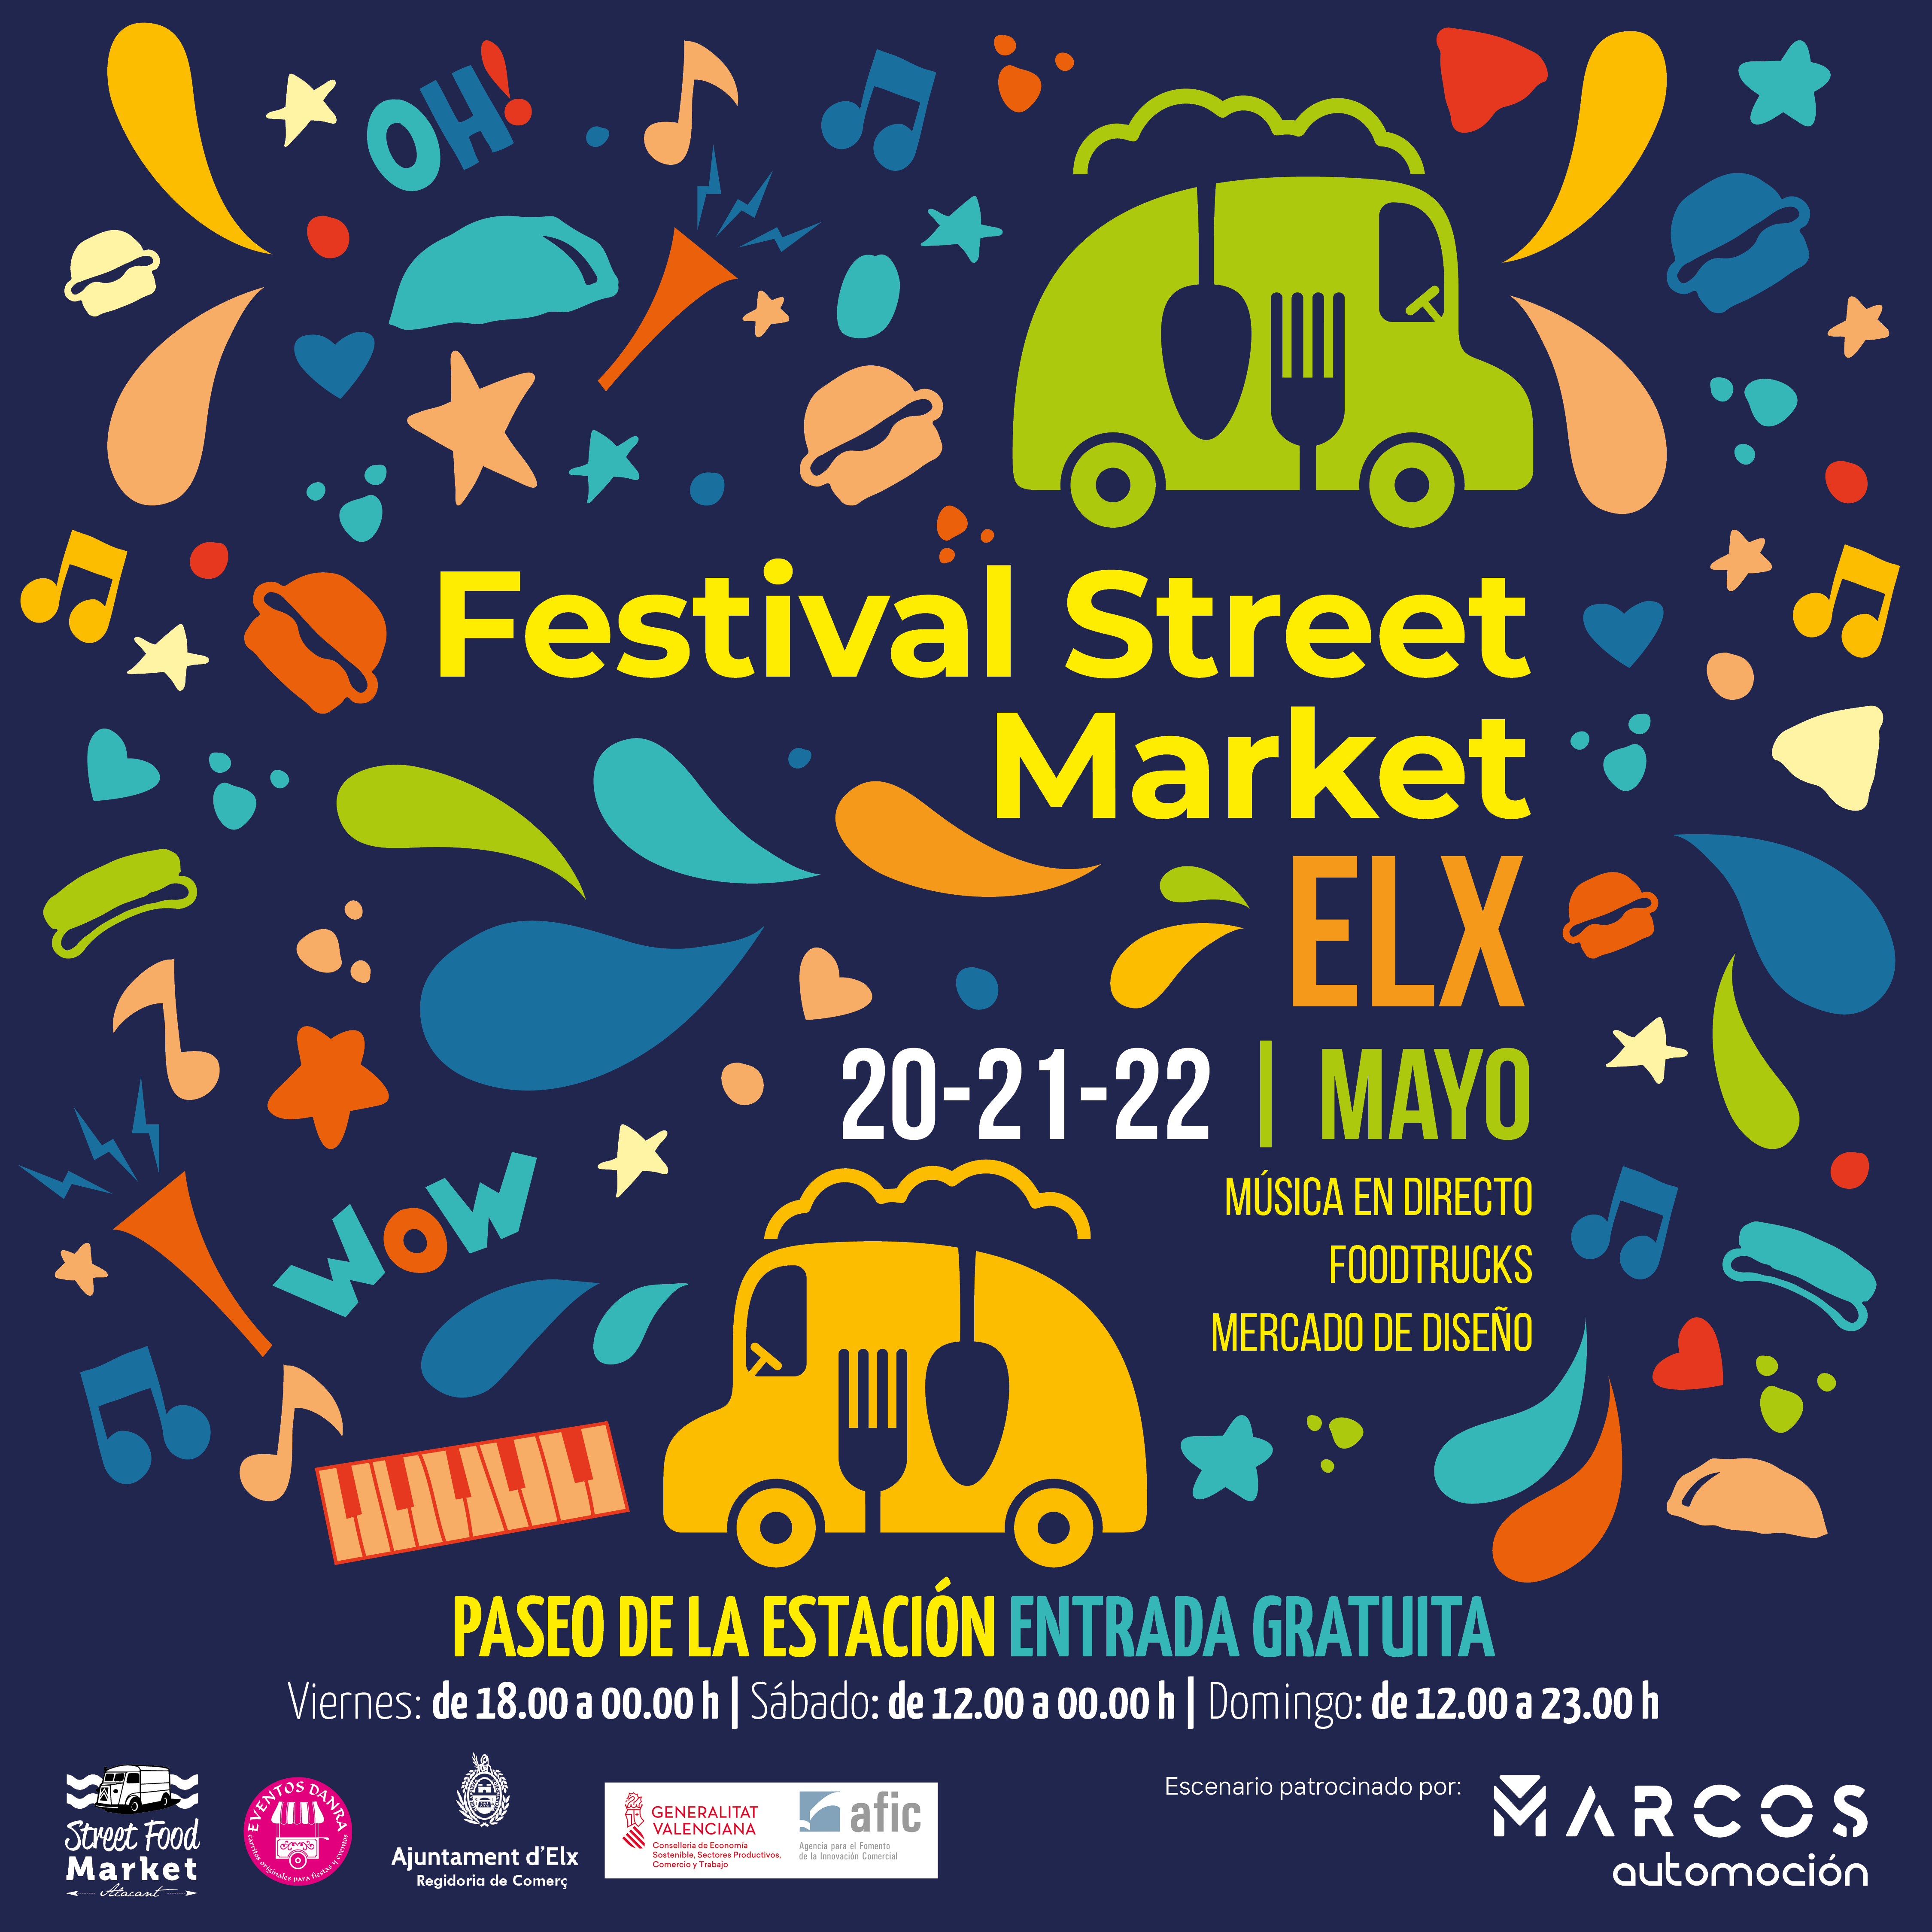 El Festival Street Market vuelve a Elche